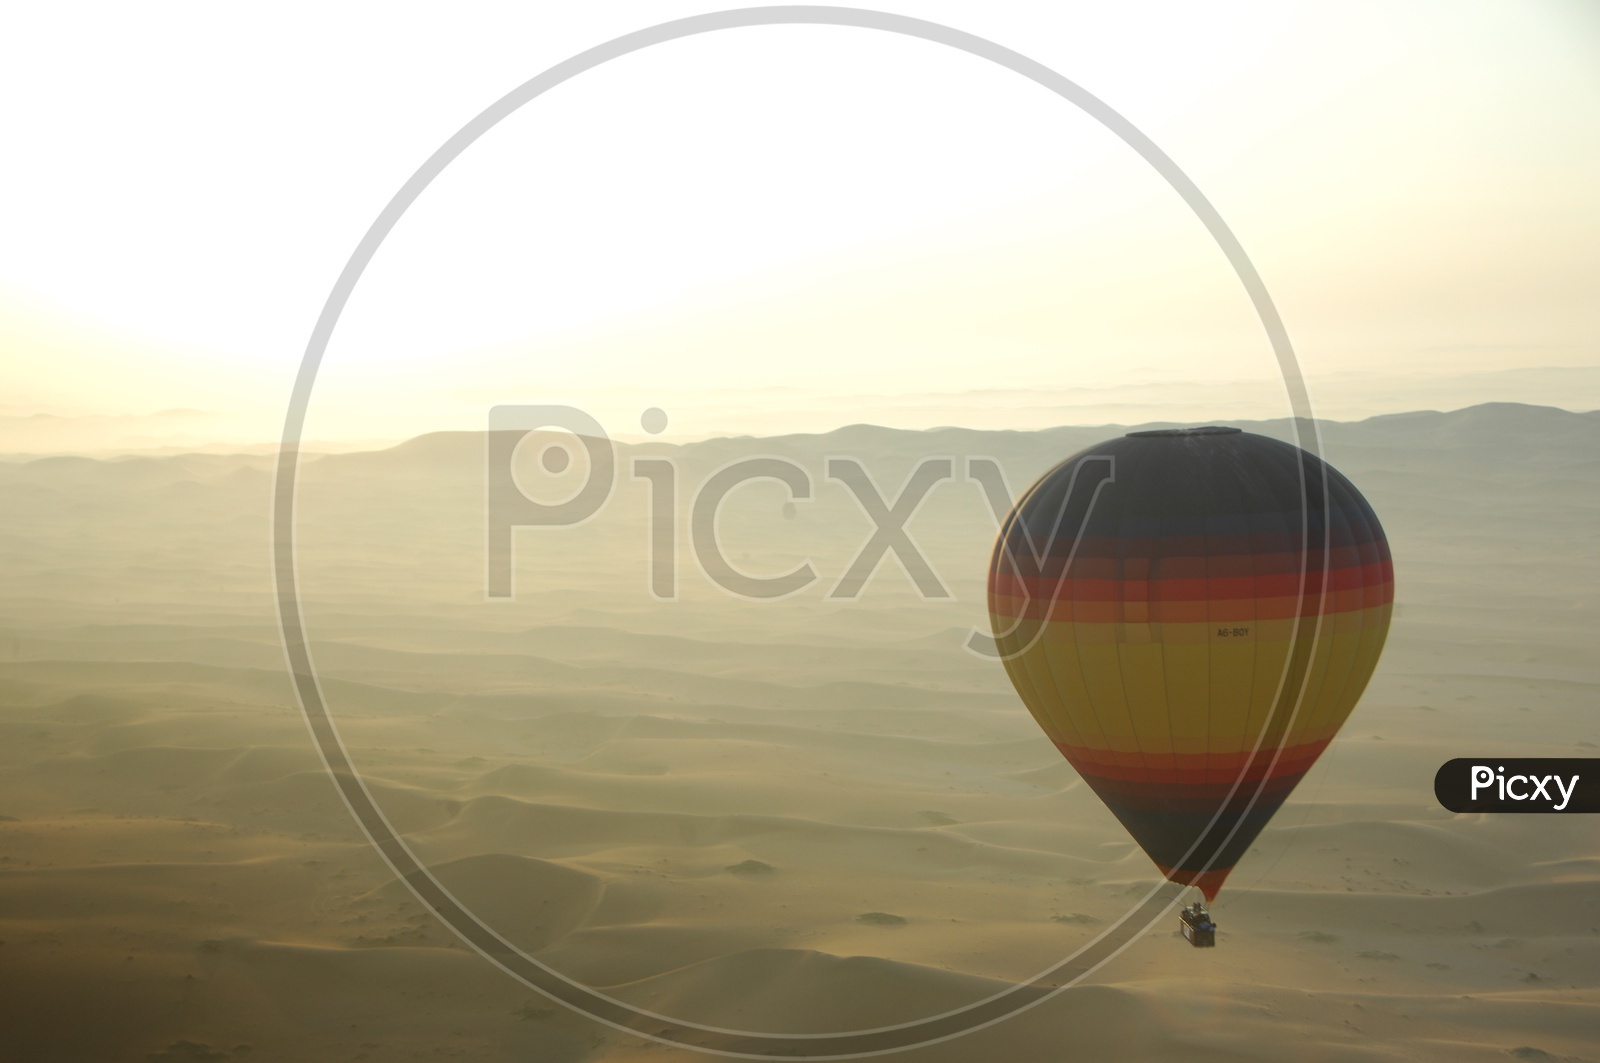 Colorful Hot Air Balloon Flying Over Dubai Desert